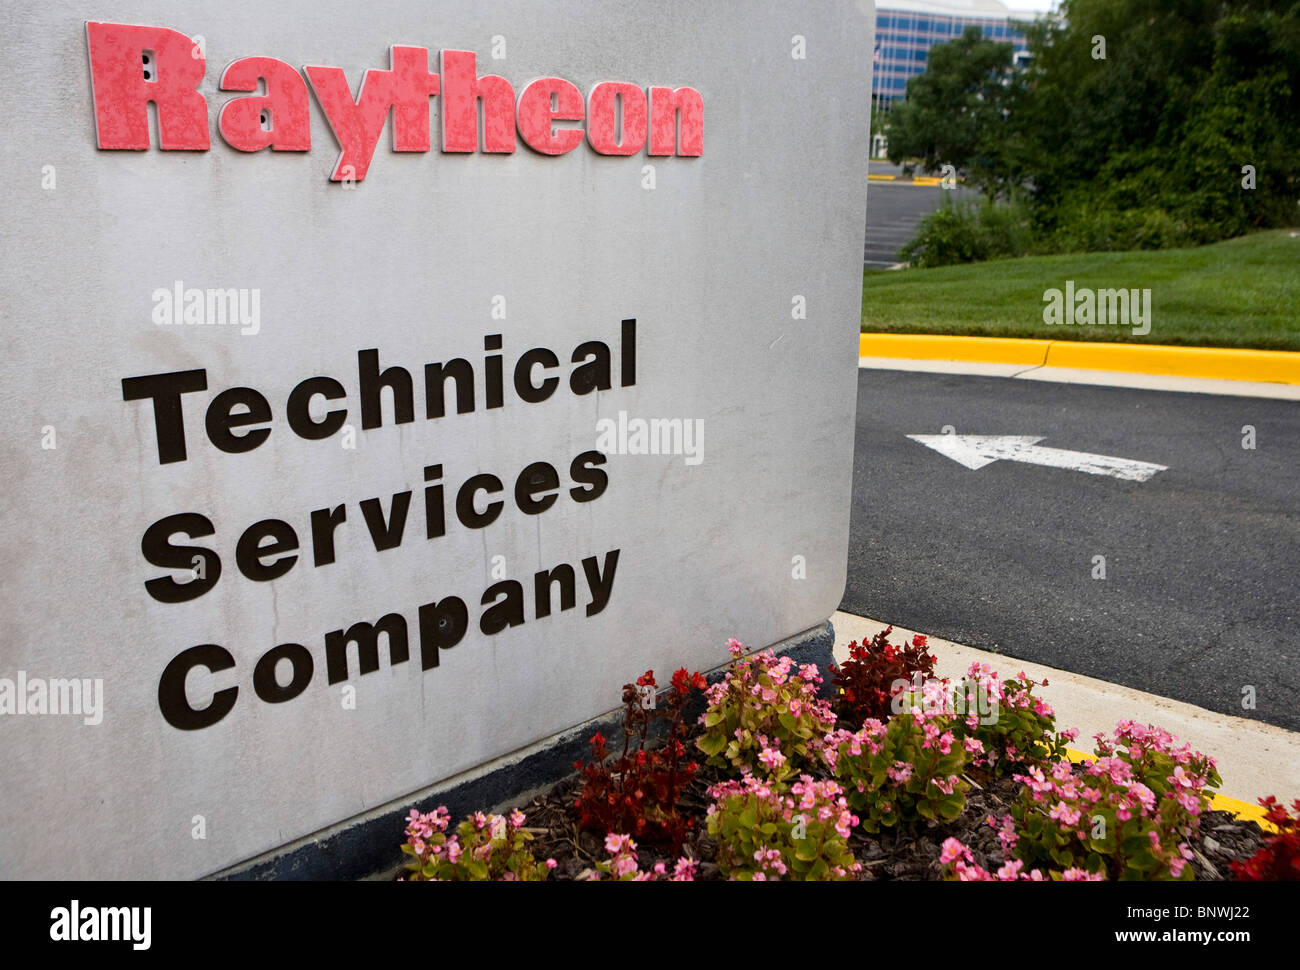 Raytheon Technical Services Company. Stock Photo